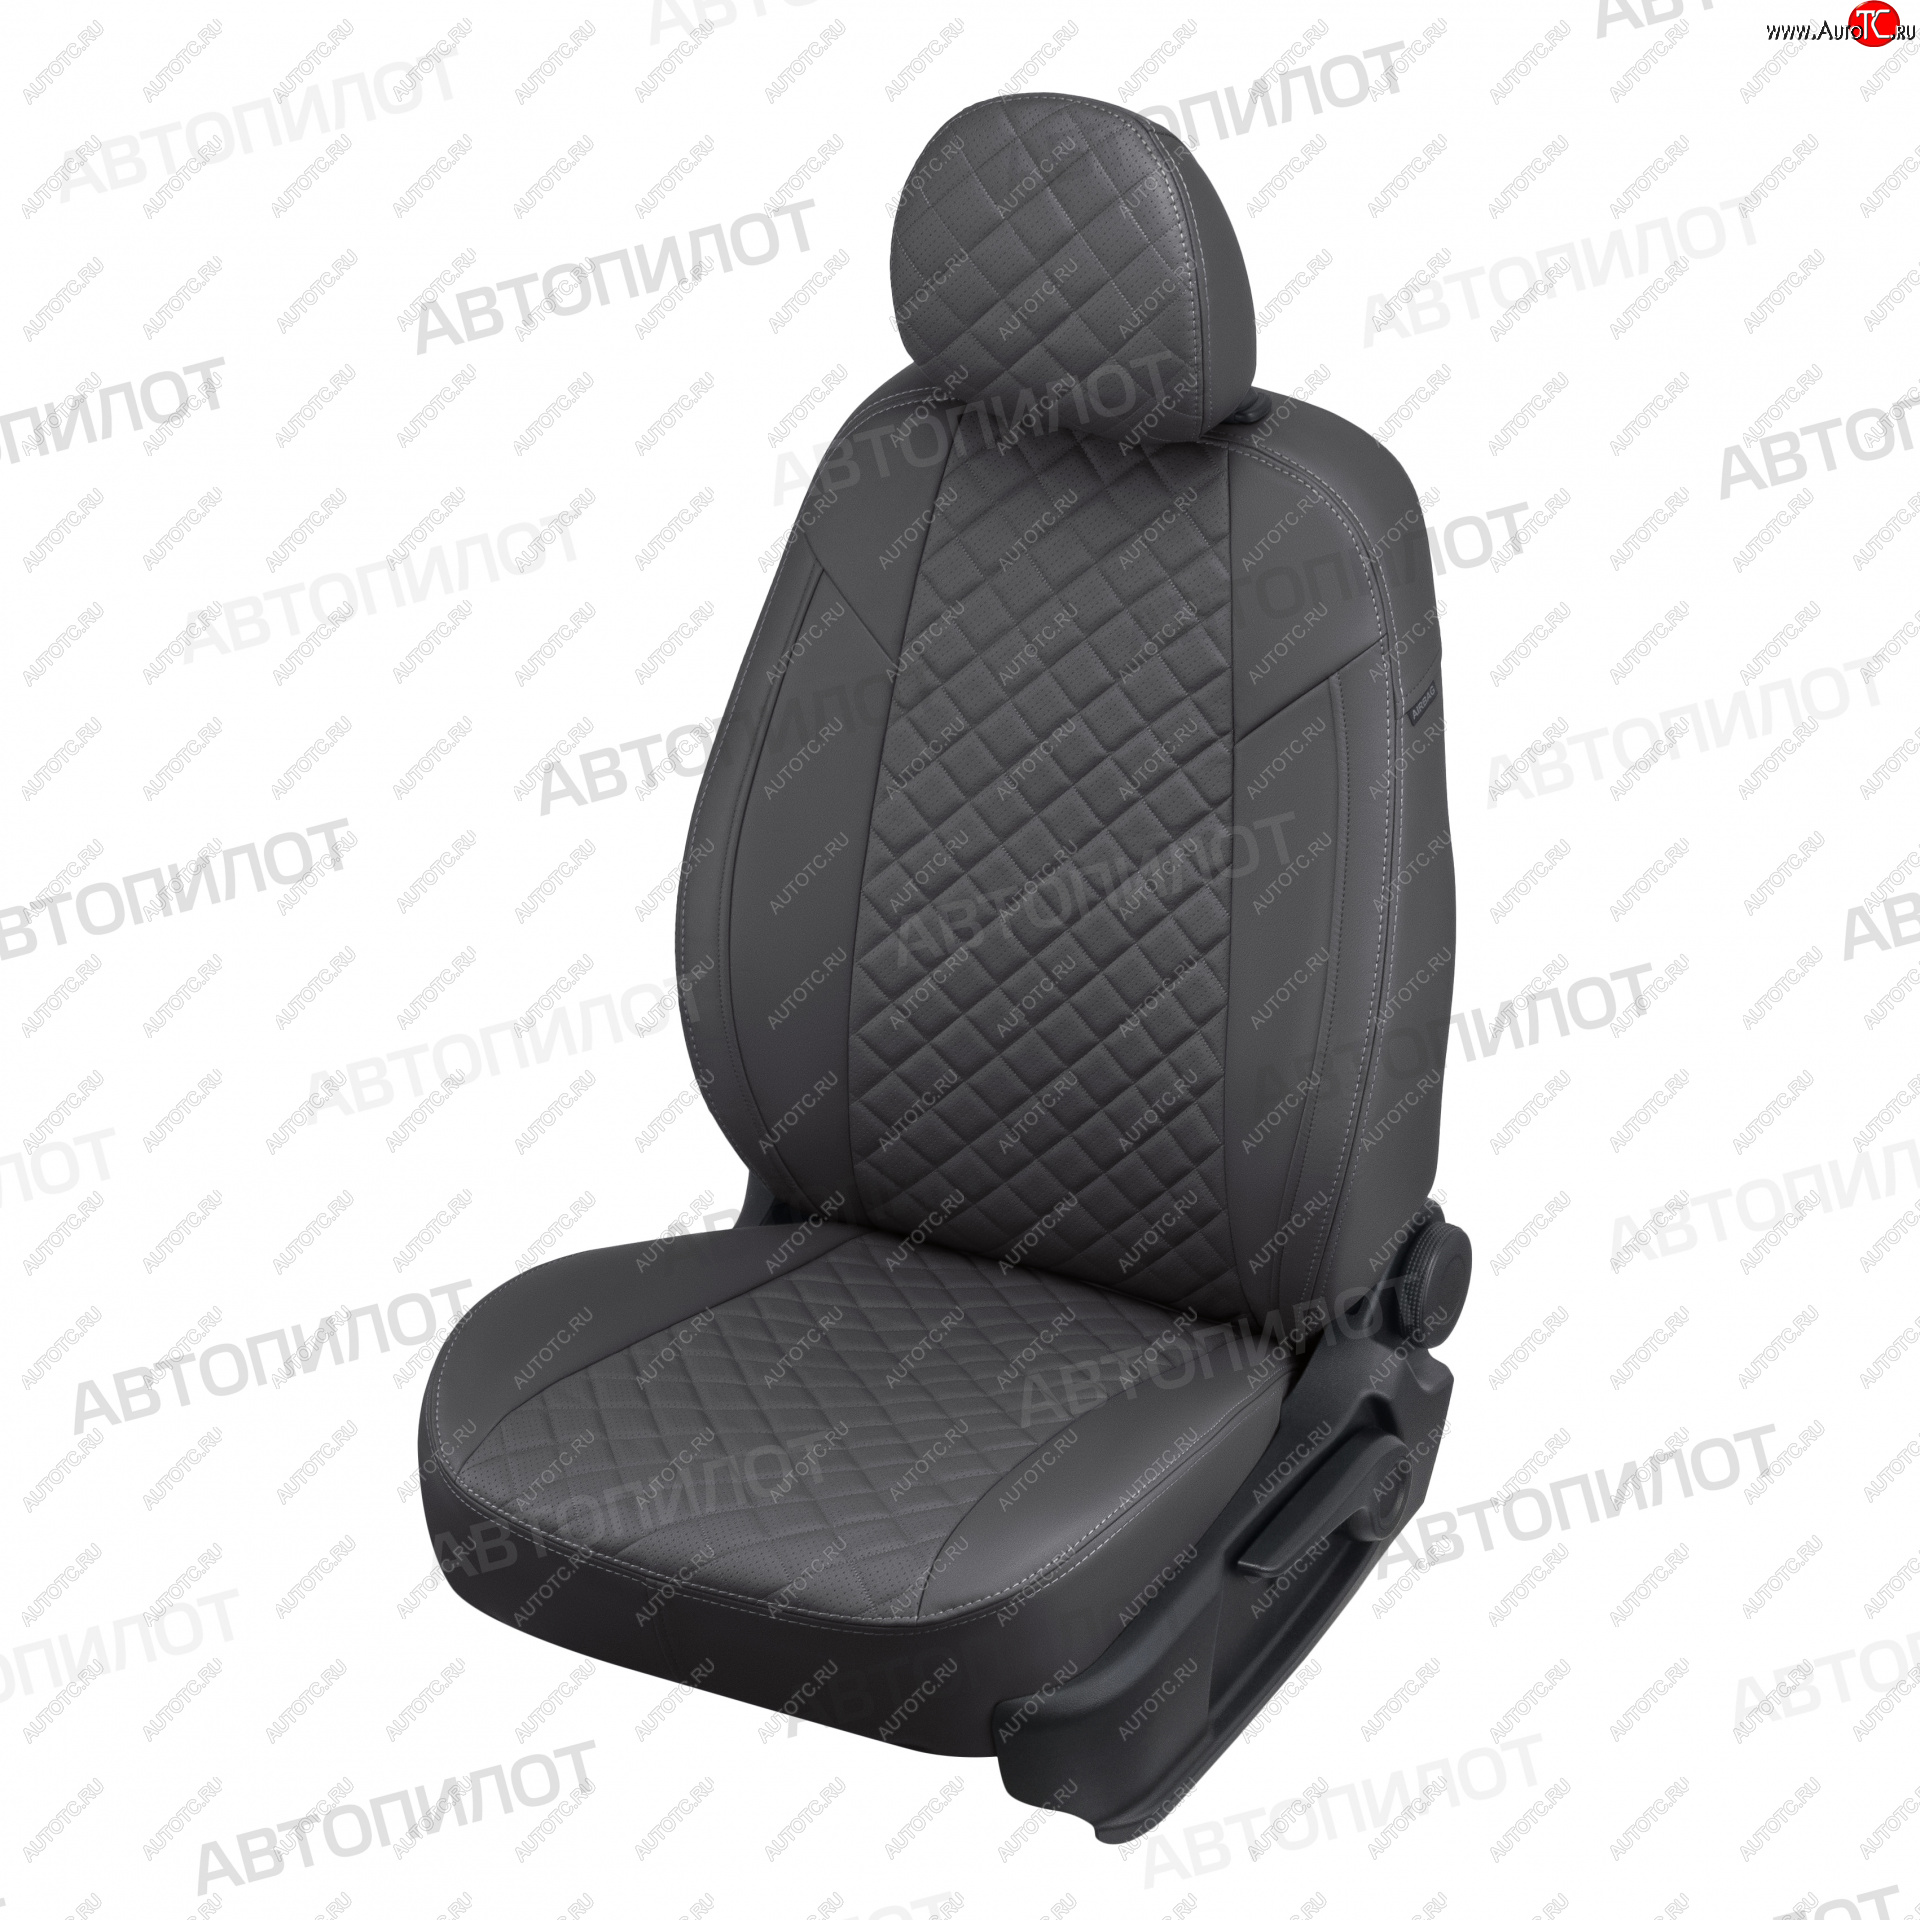 21 599 р. Чехлы сидений (9 мест, экокожа) Автопилот Ромб  Ford Transit  3 (2006-2014) (темно-серый)